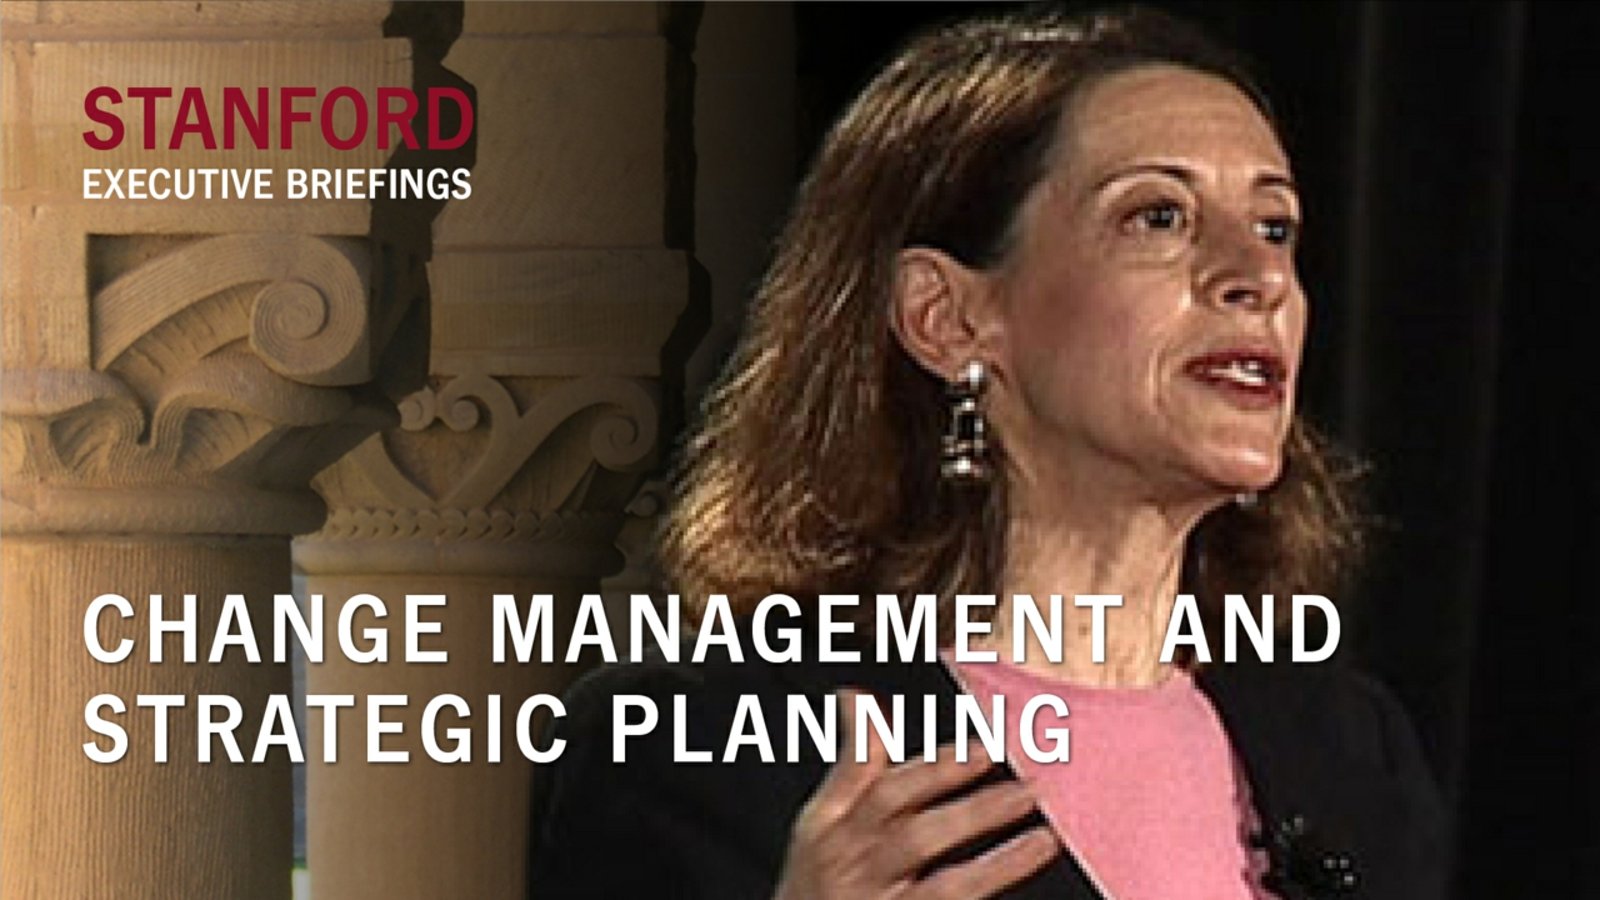 Change Management and Strategic Planning - With Roberta Katz